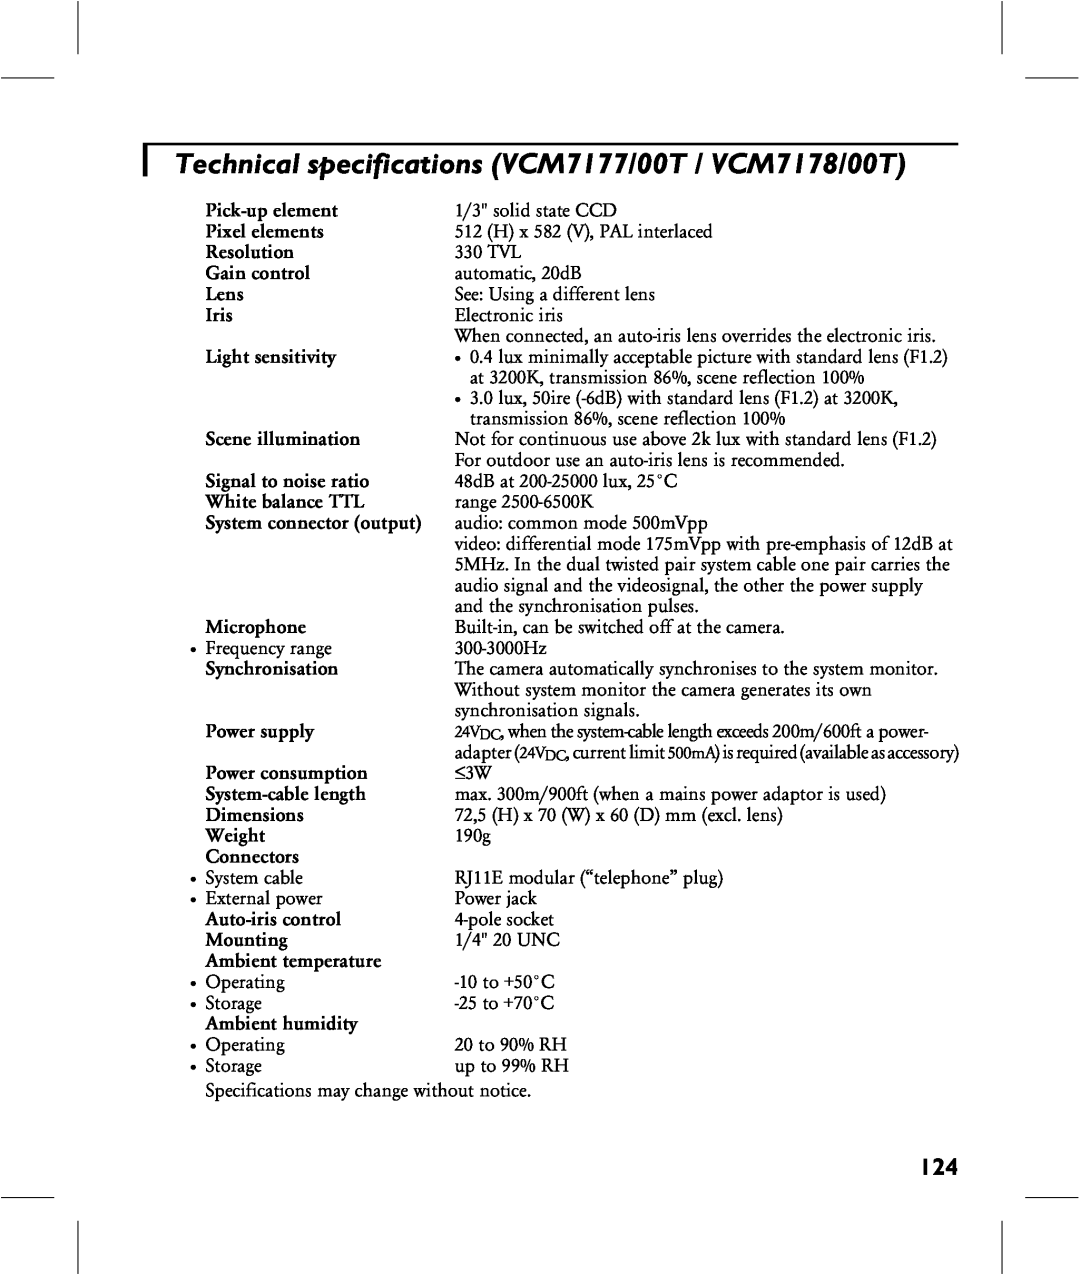 Philips manual Technical specifications VCM7177/00T / VCM7178/00T 